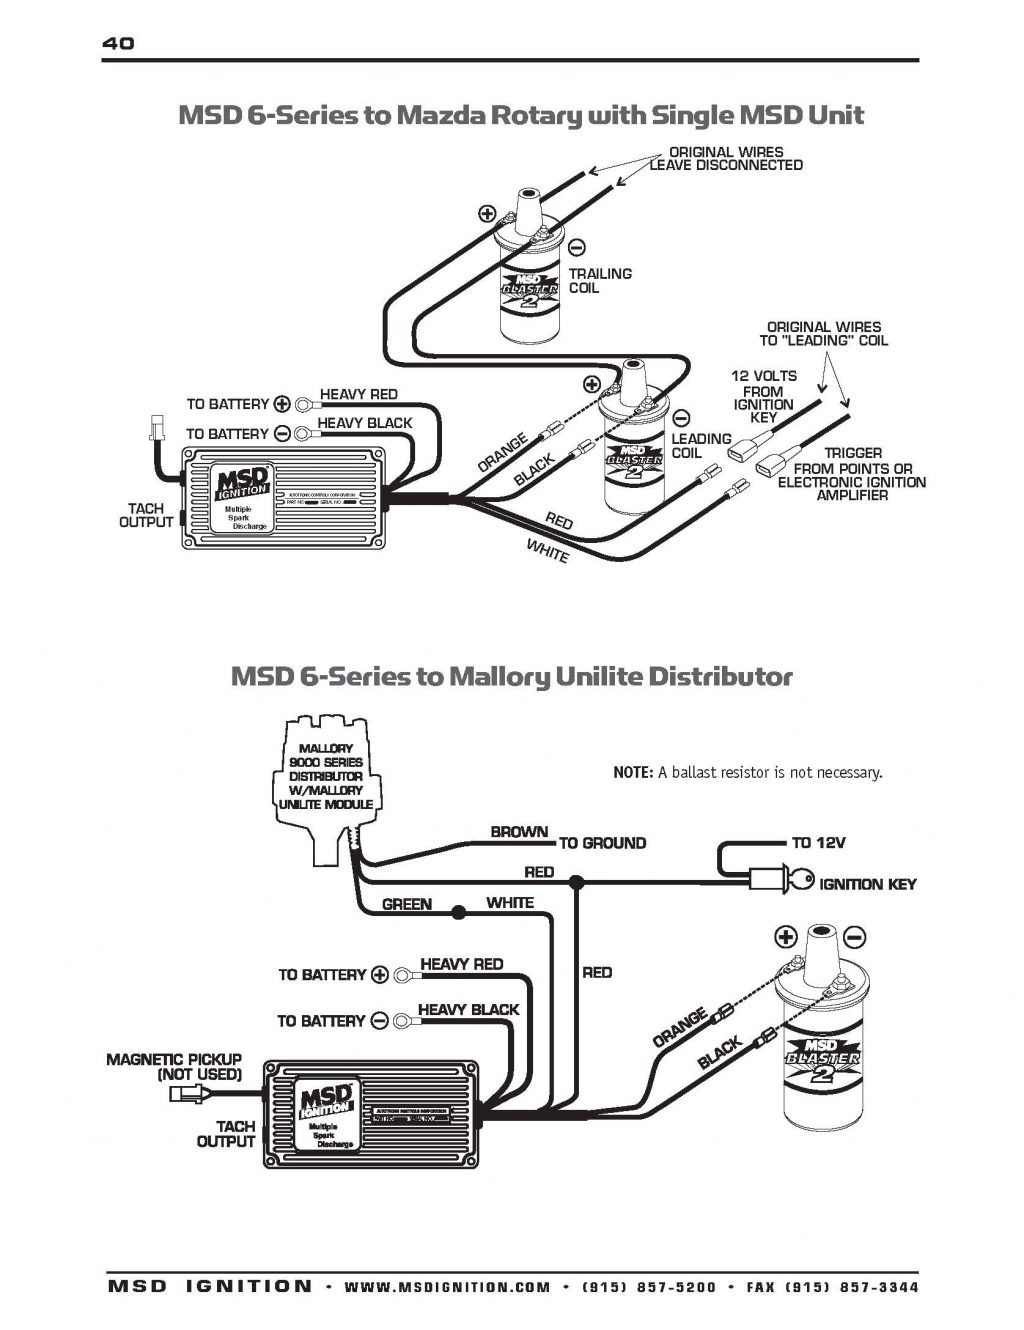 Msd Distributor Wiring Diagram - flilpfloppinthrough